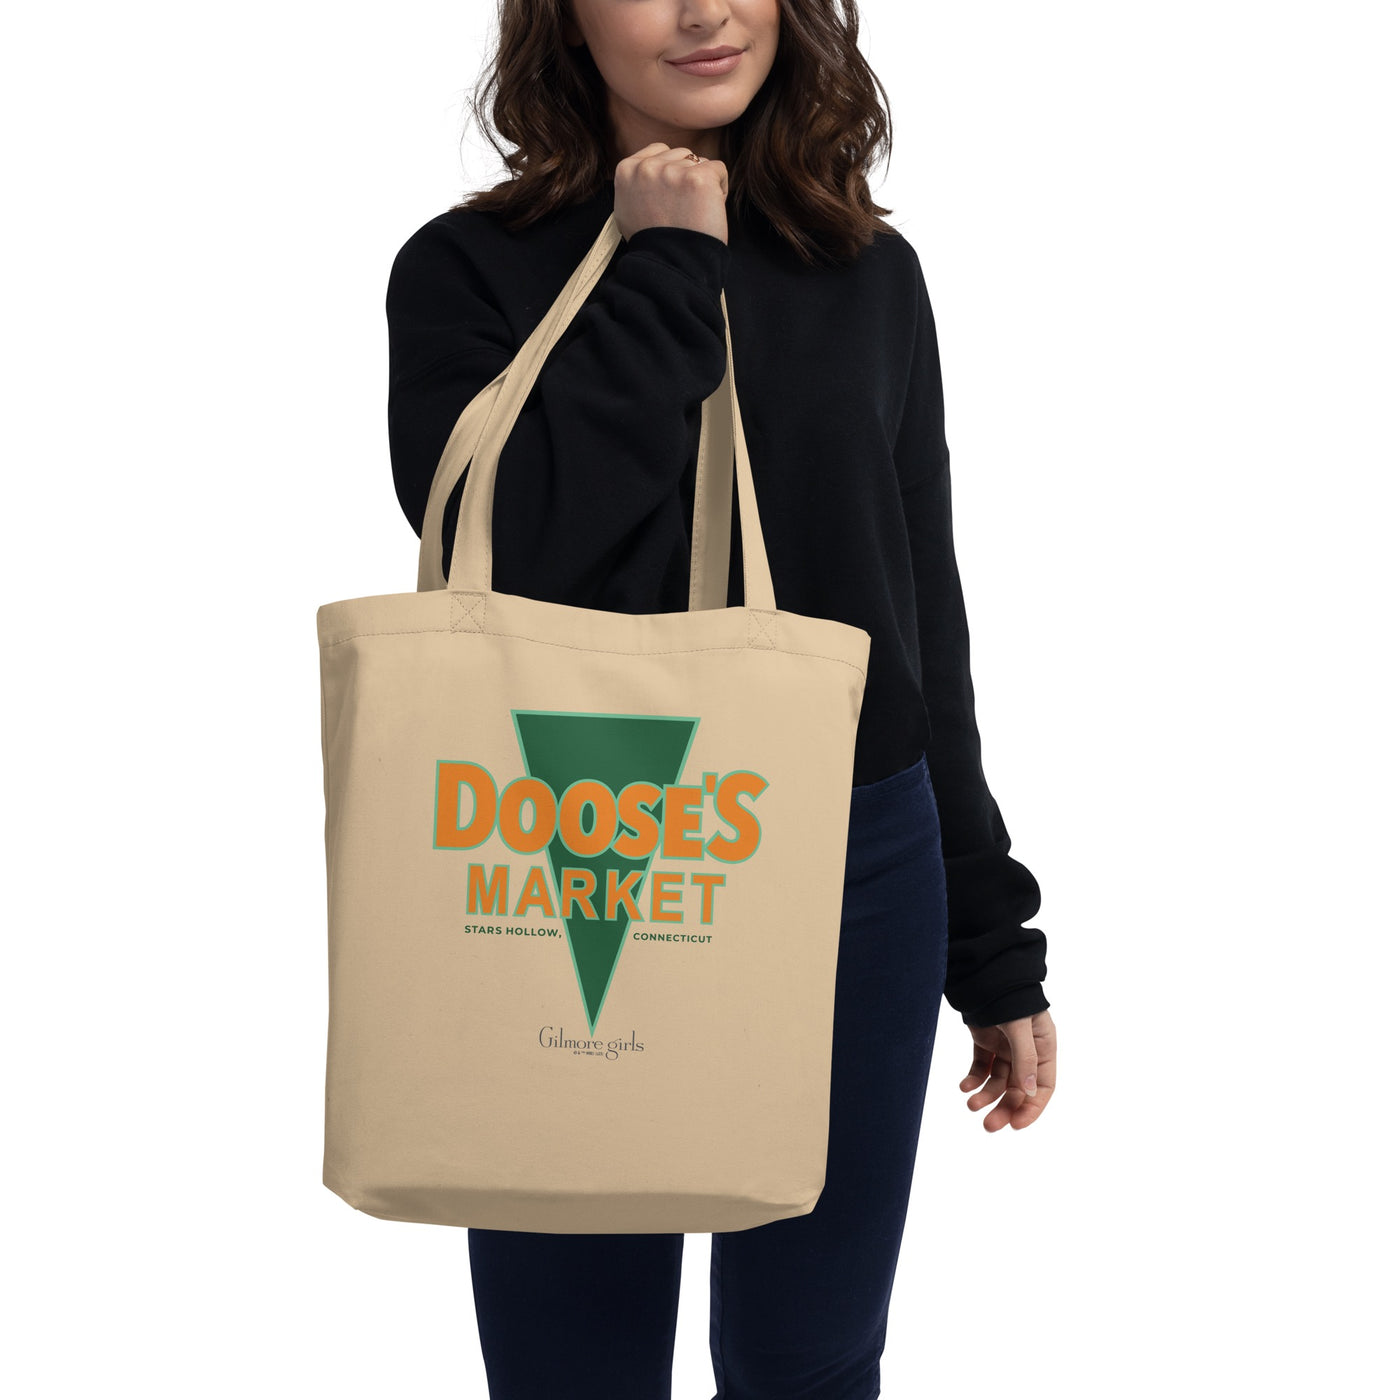 Gilmore Girls Doose's Market Tote Bag